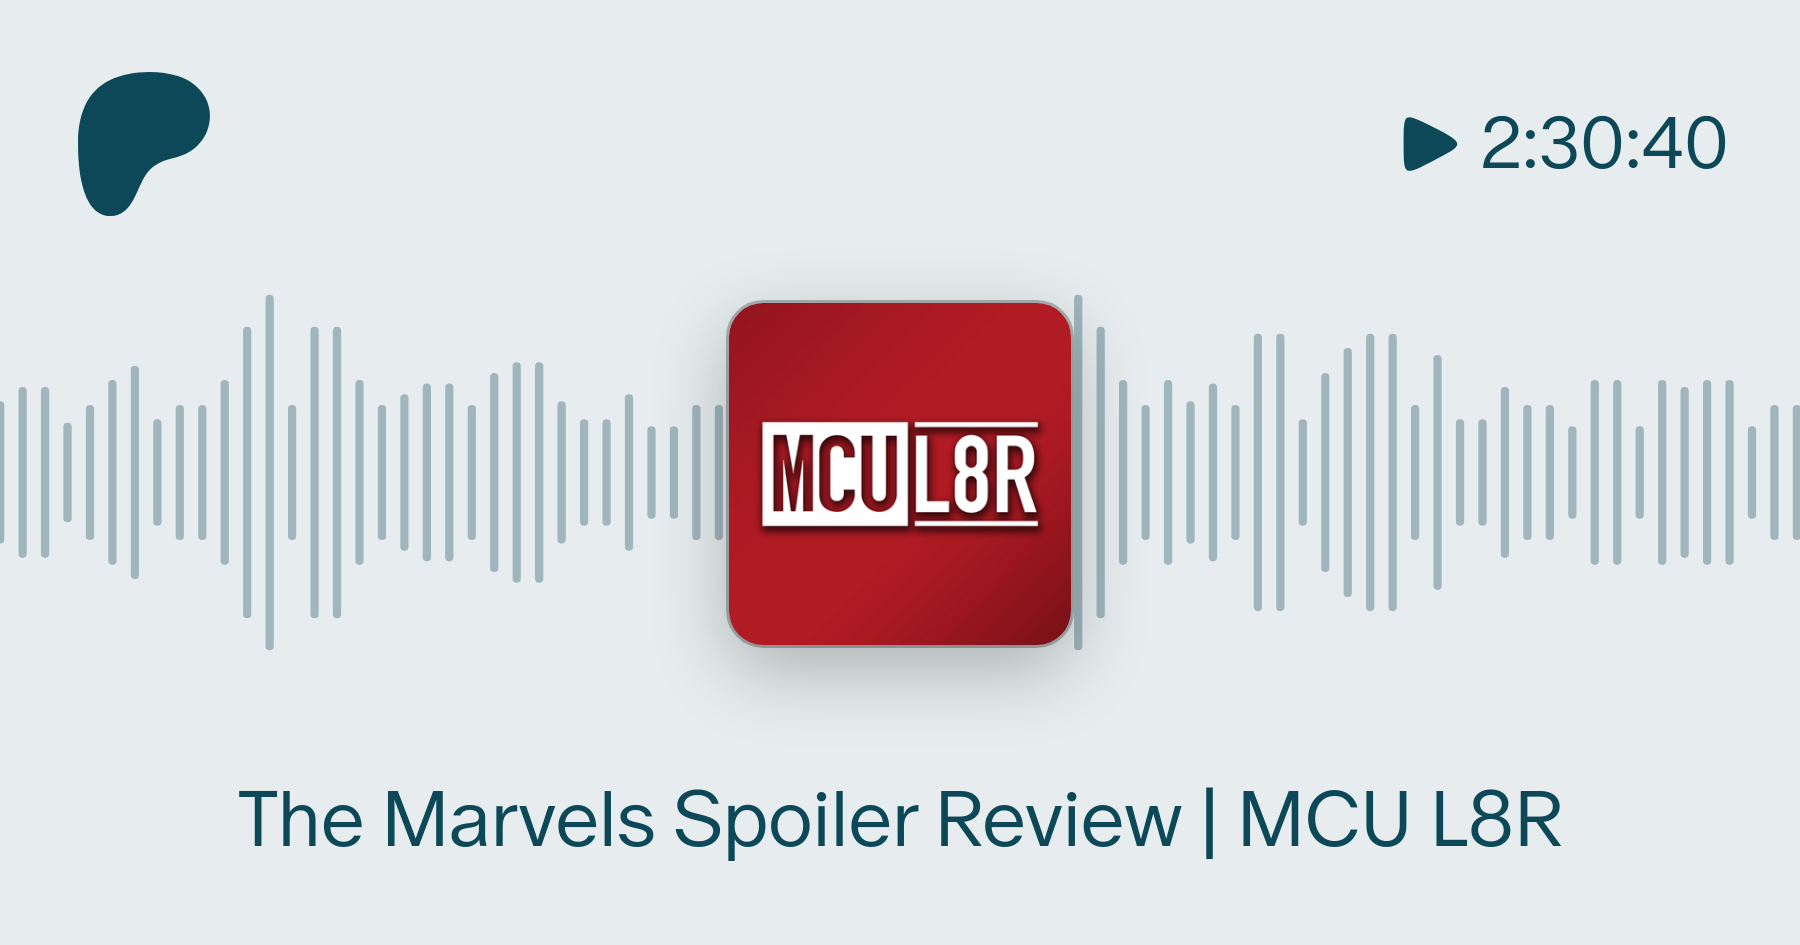 The Marvels Spoiler Review, MCU L8R - POST Wrestling